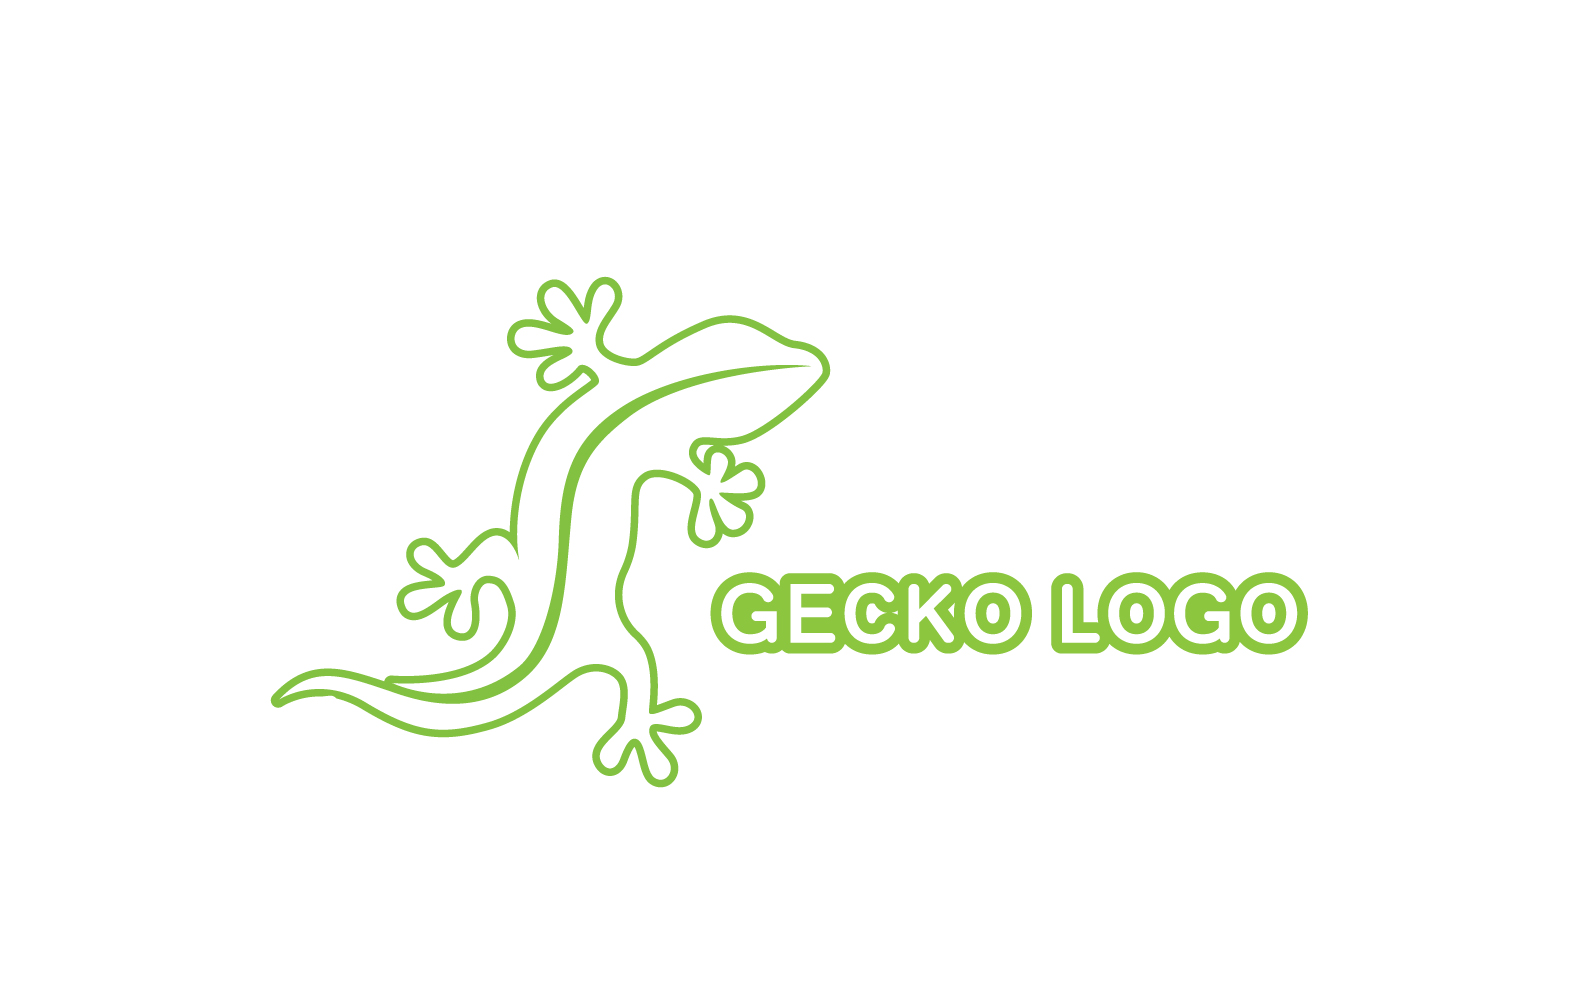 Lizard gecko animal reptil logo simple v36